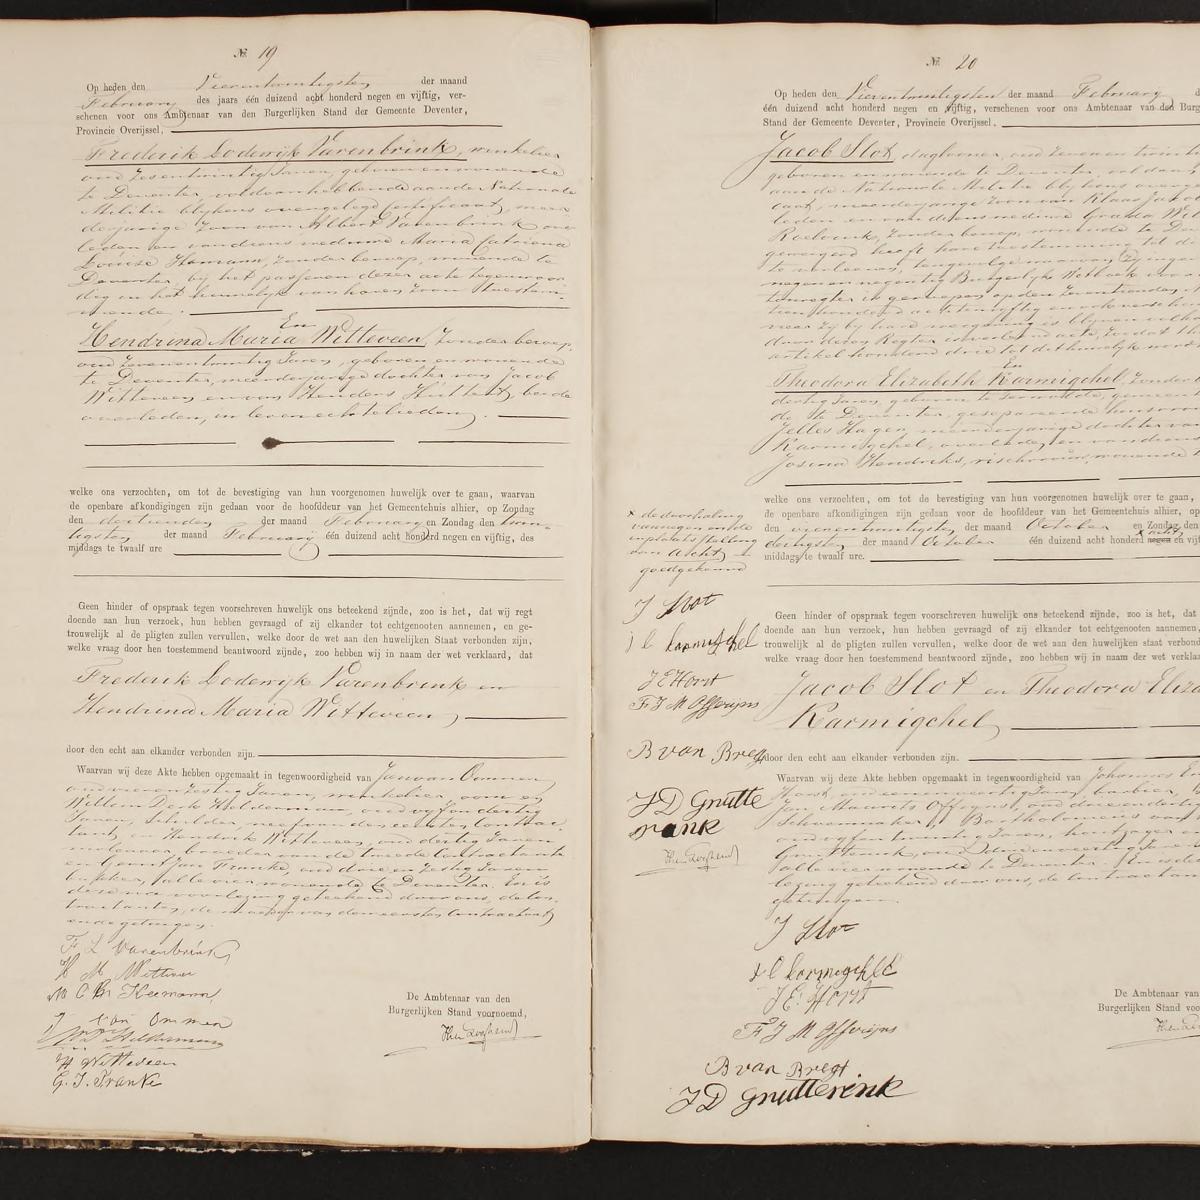 Civil registry of marriages, Deventer, 1859, records 19-20